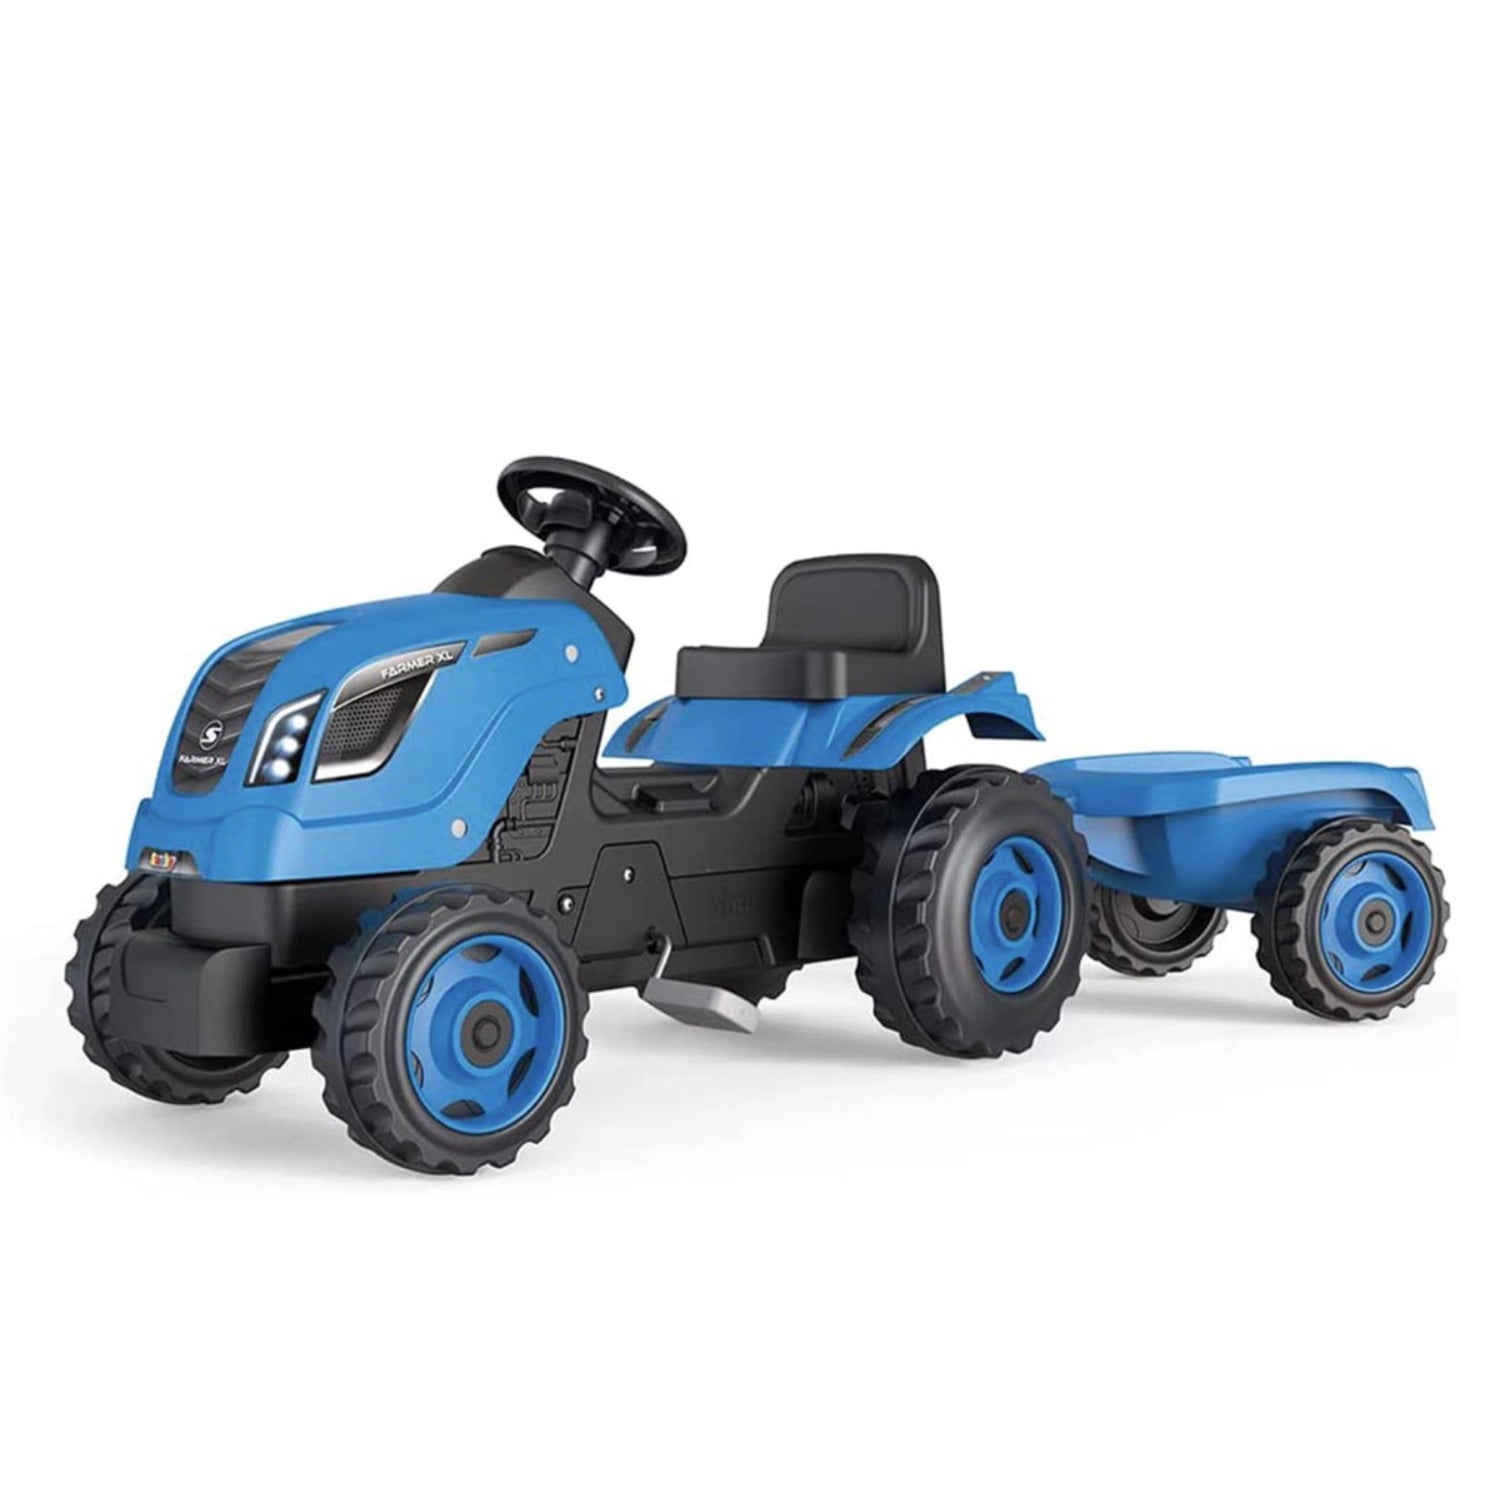 Smoby XL Römorklu Pedallı Traktör - Mavi 710129 | Toysall